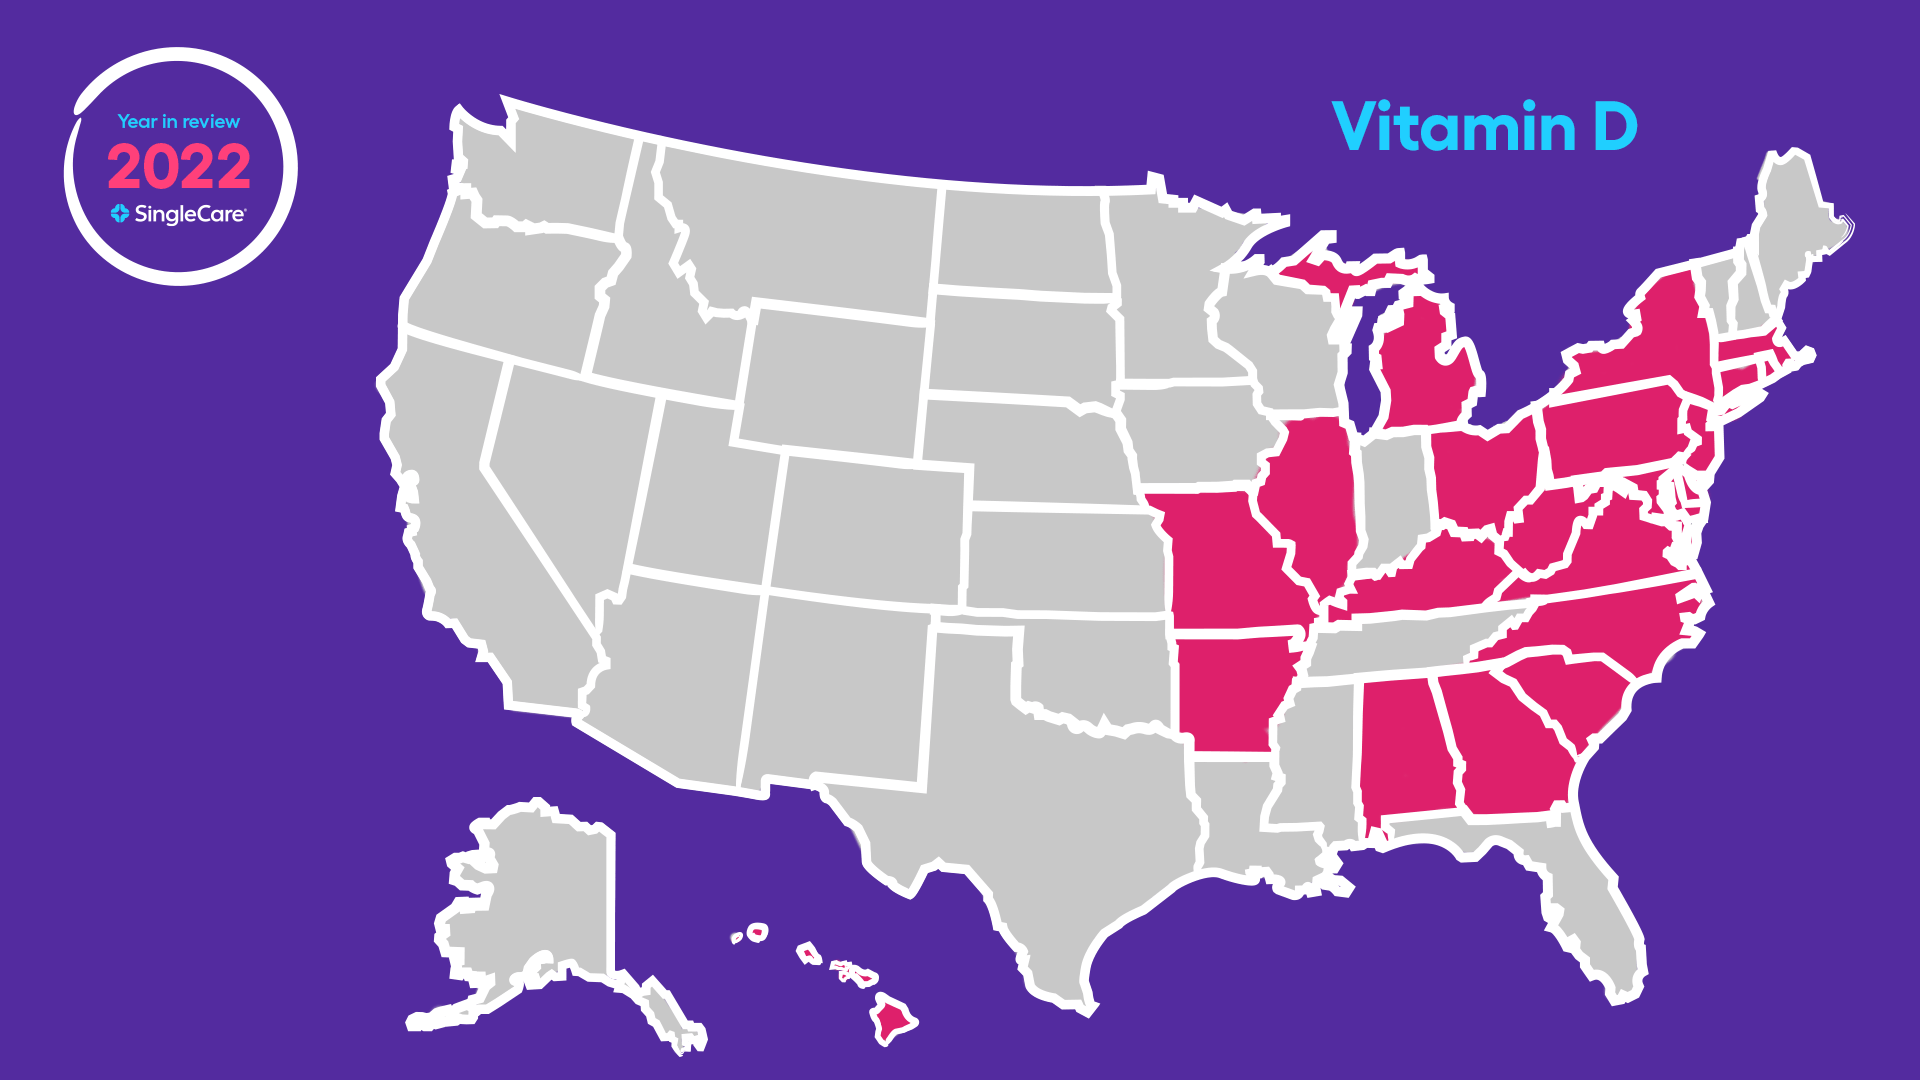 vitamin D - most common prescriptions